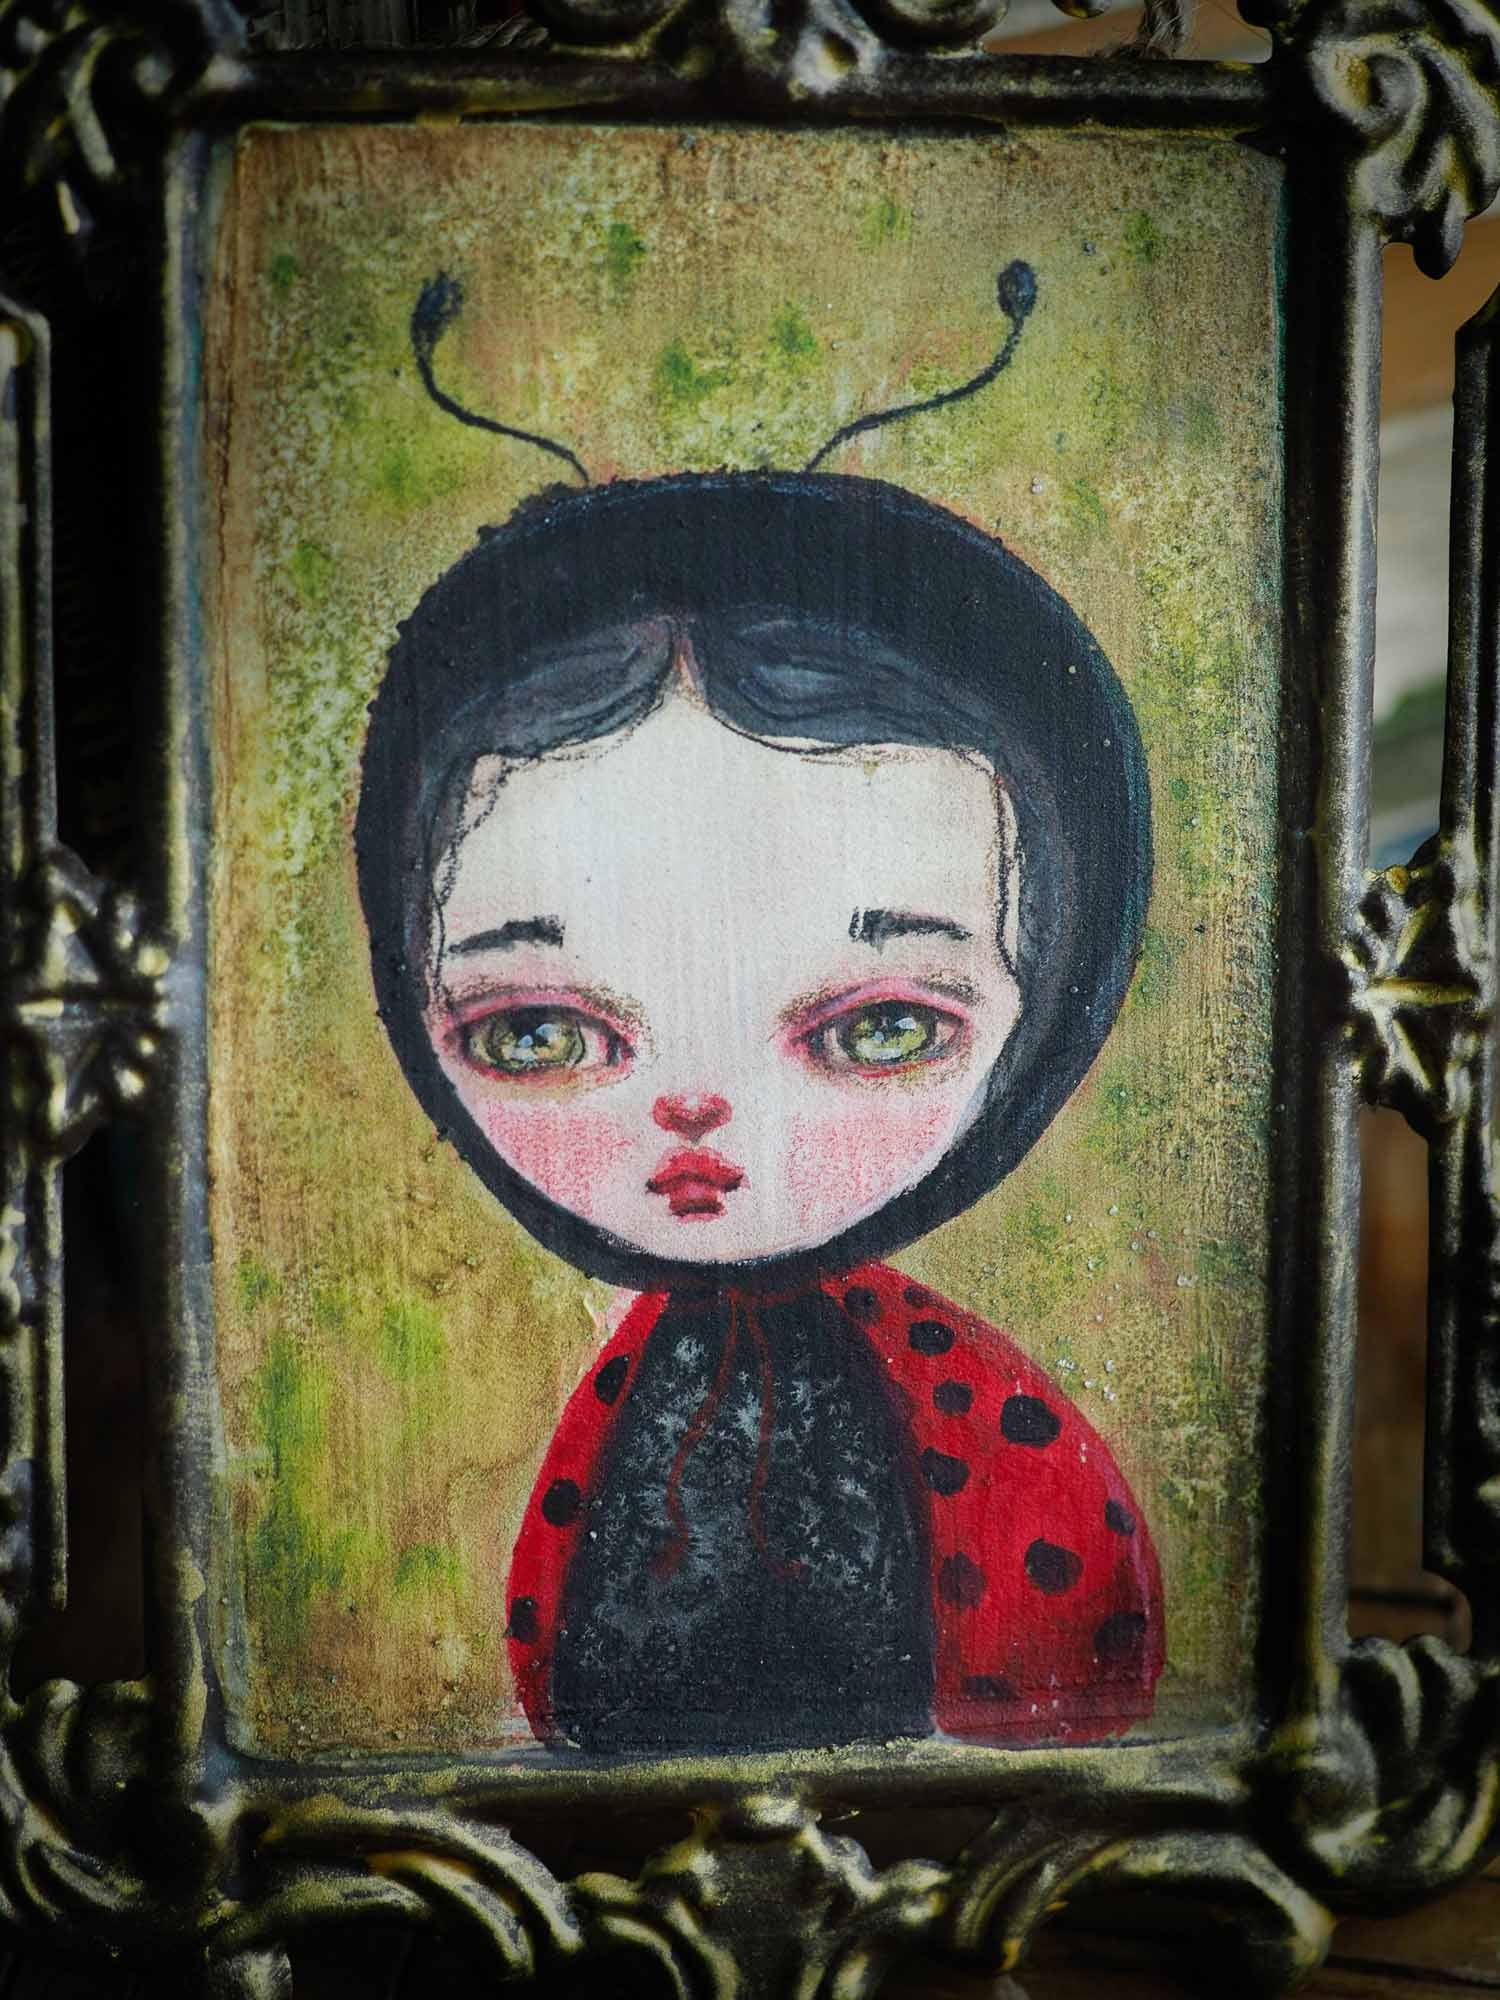 Insect bug red ladybug painting watercolor mixed media watercolor painting by Danita Art